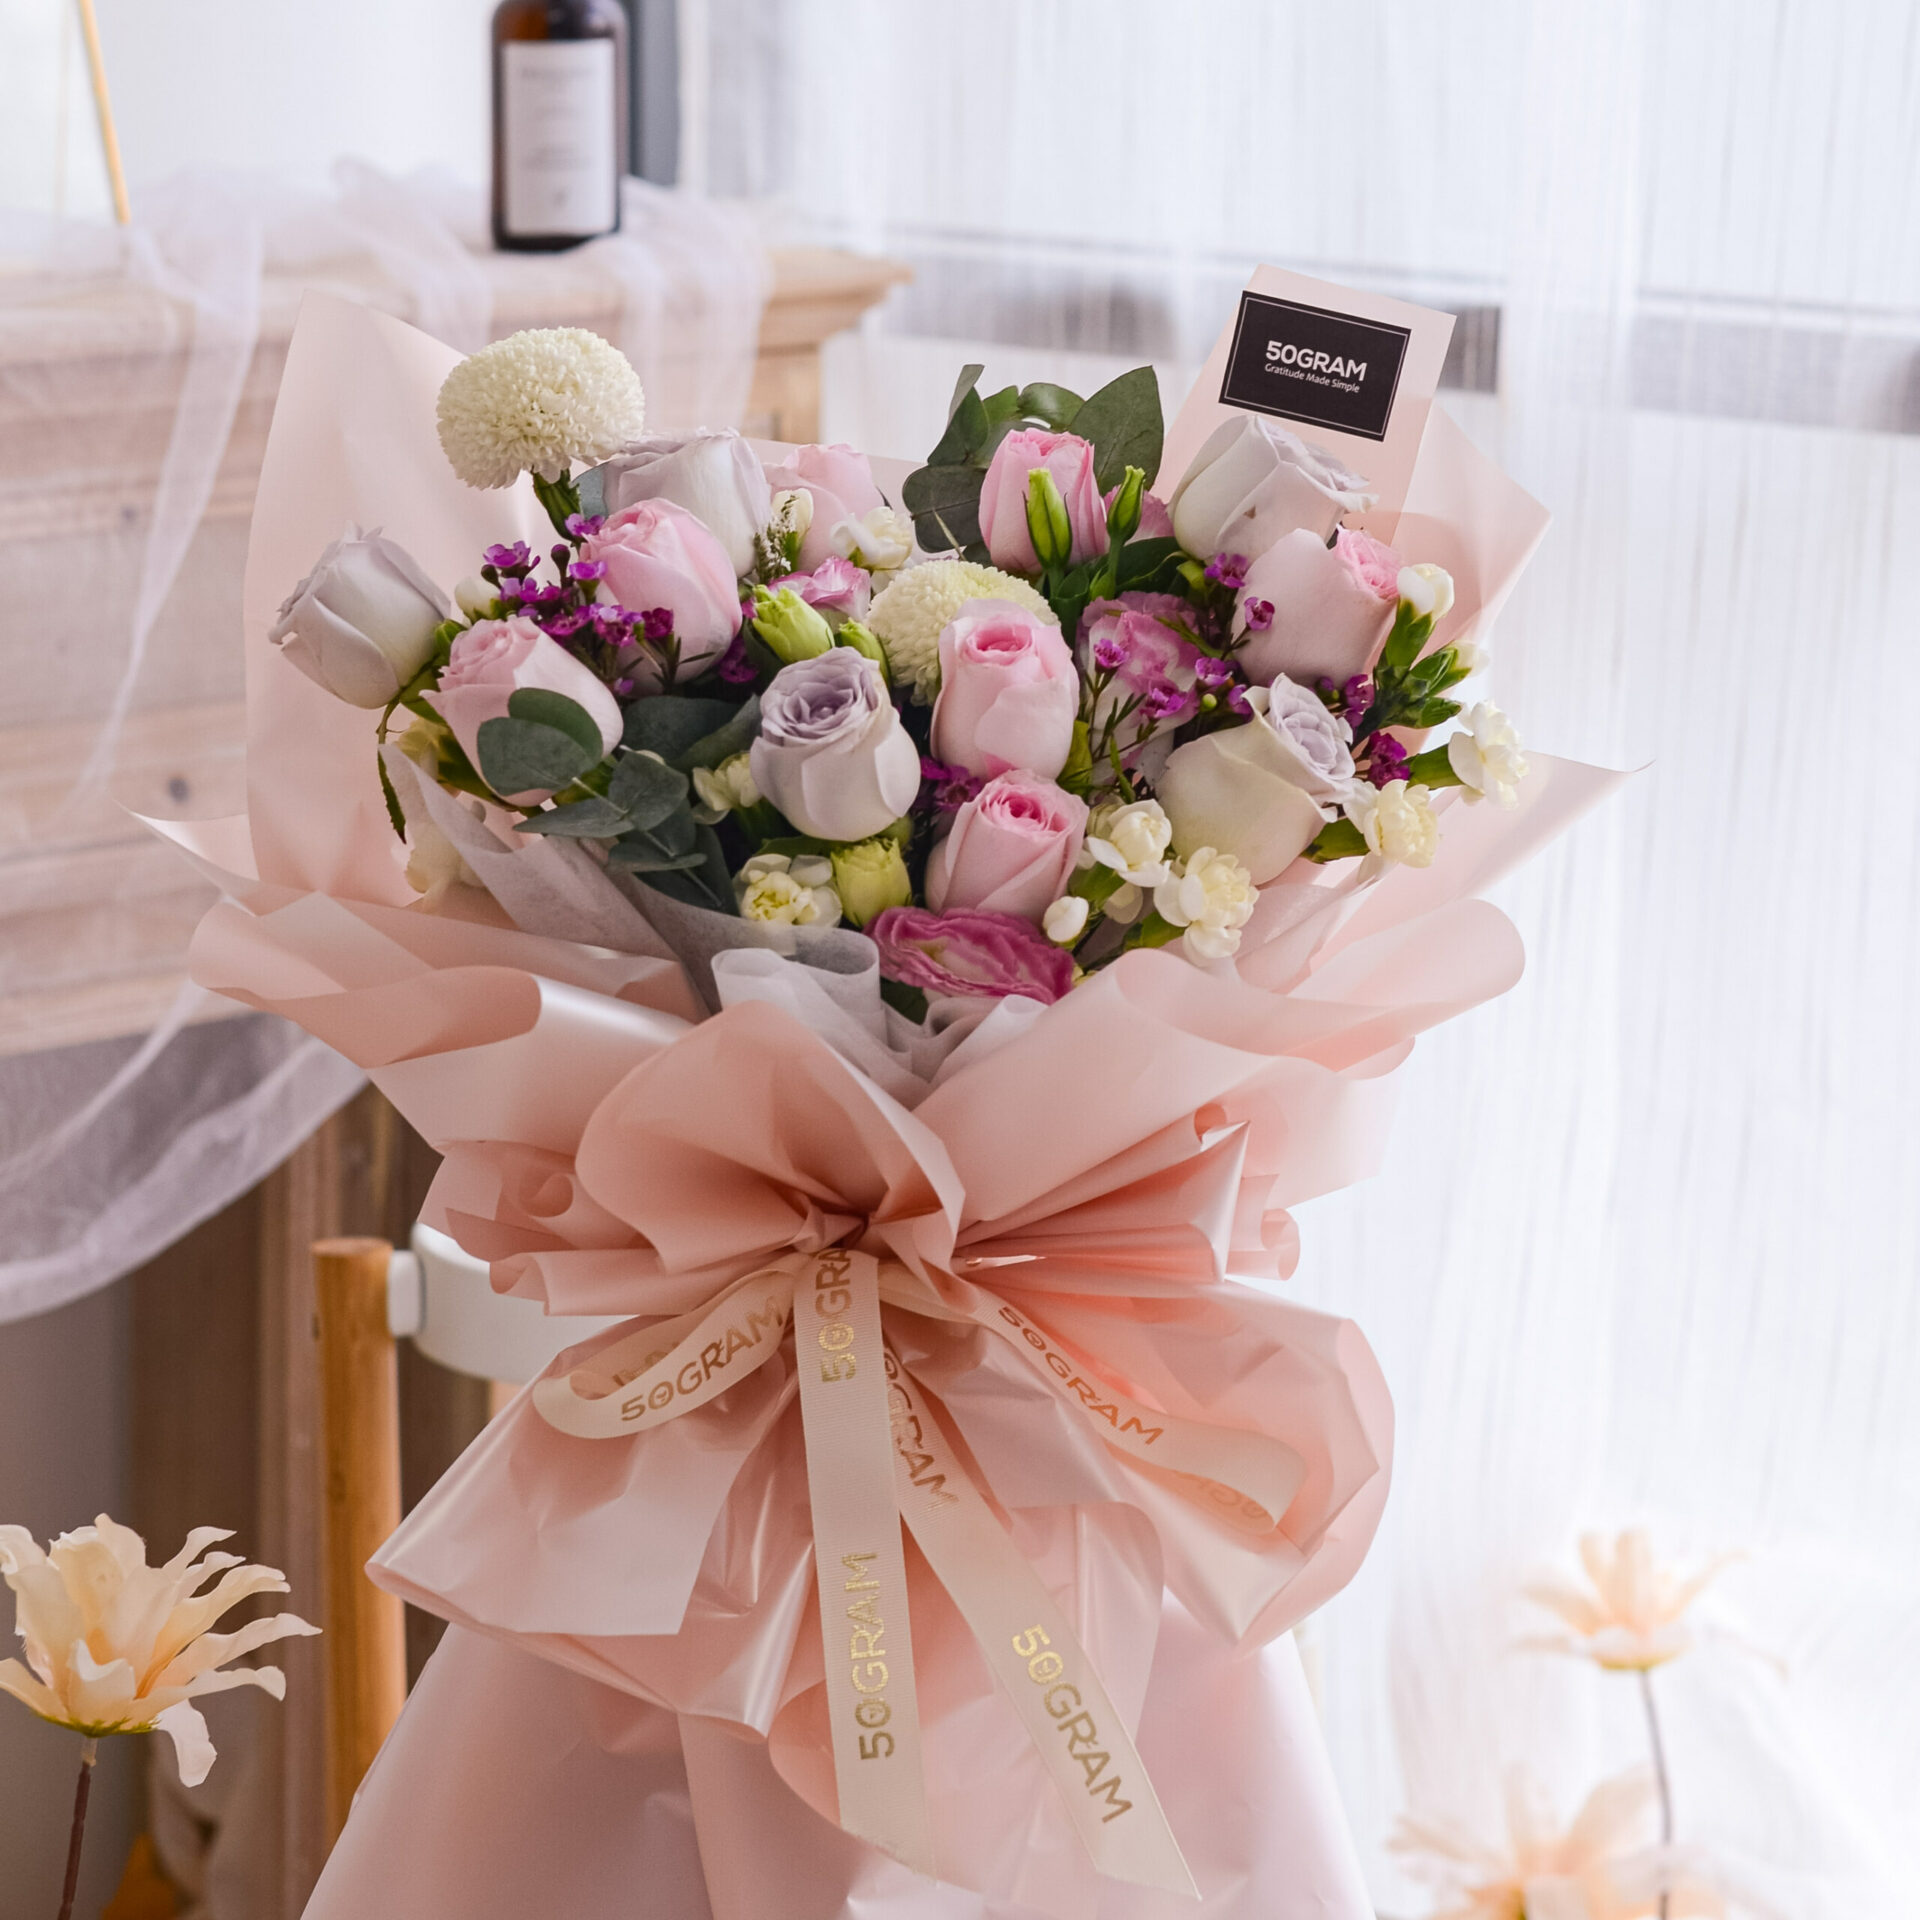 Pink Rose, Kenya Raindance, 2 Tone Pink Eustoma, Spary Carnation, White Wax Flower, White Ping Pong, Eucalyptus, Cinerea, Free Delivery, KL, Kuala Lumpur, Birthday, Surprise